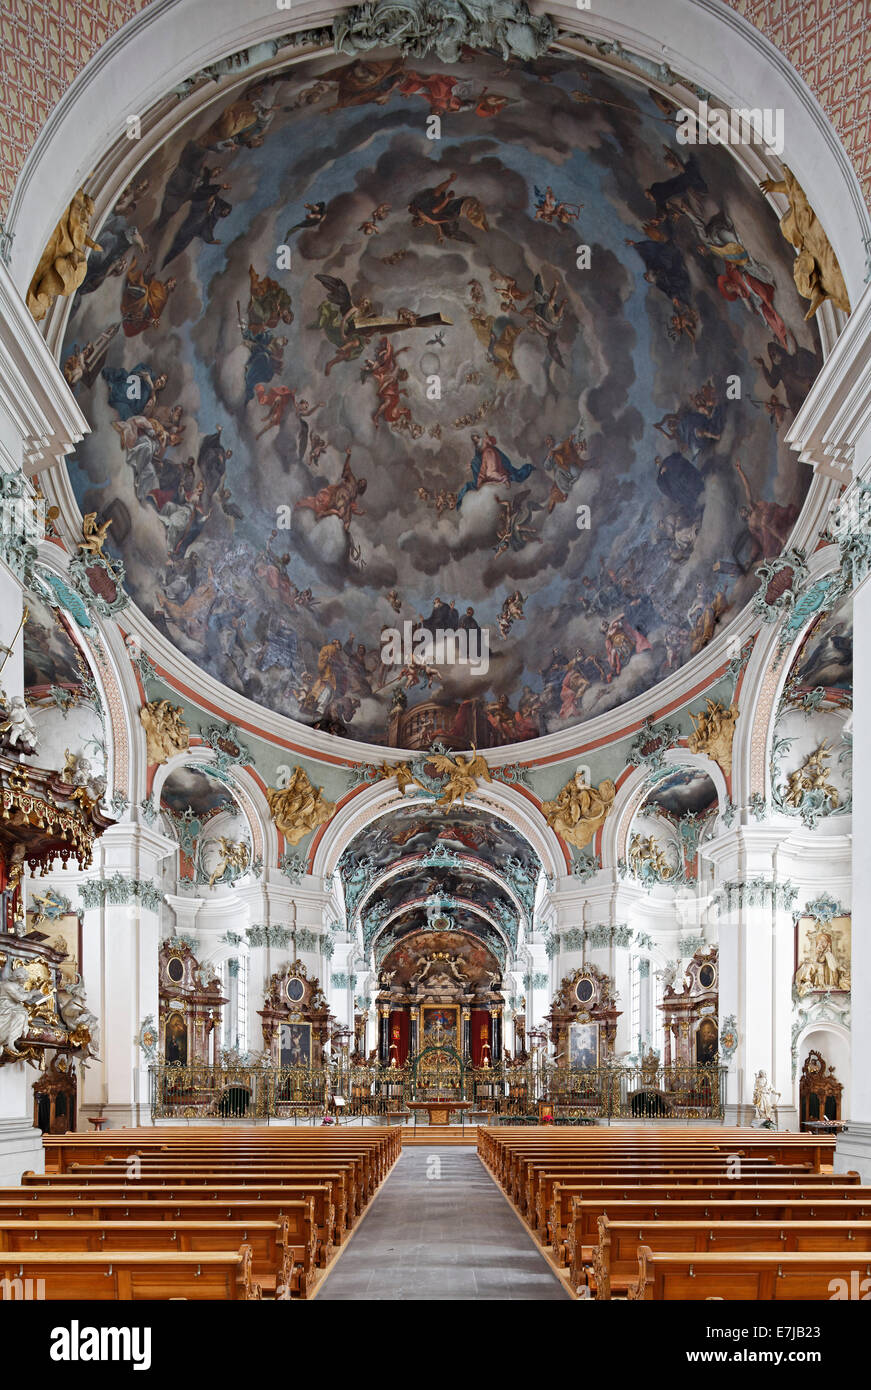 Nave, interior of the baroque Catholic Cathedral of St. Gallen, St. Gallen, Canton of St. Gallen, Switzerland Stock Photo